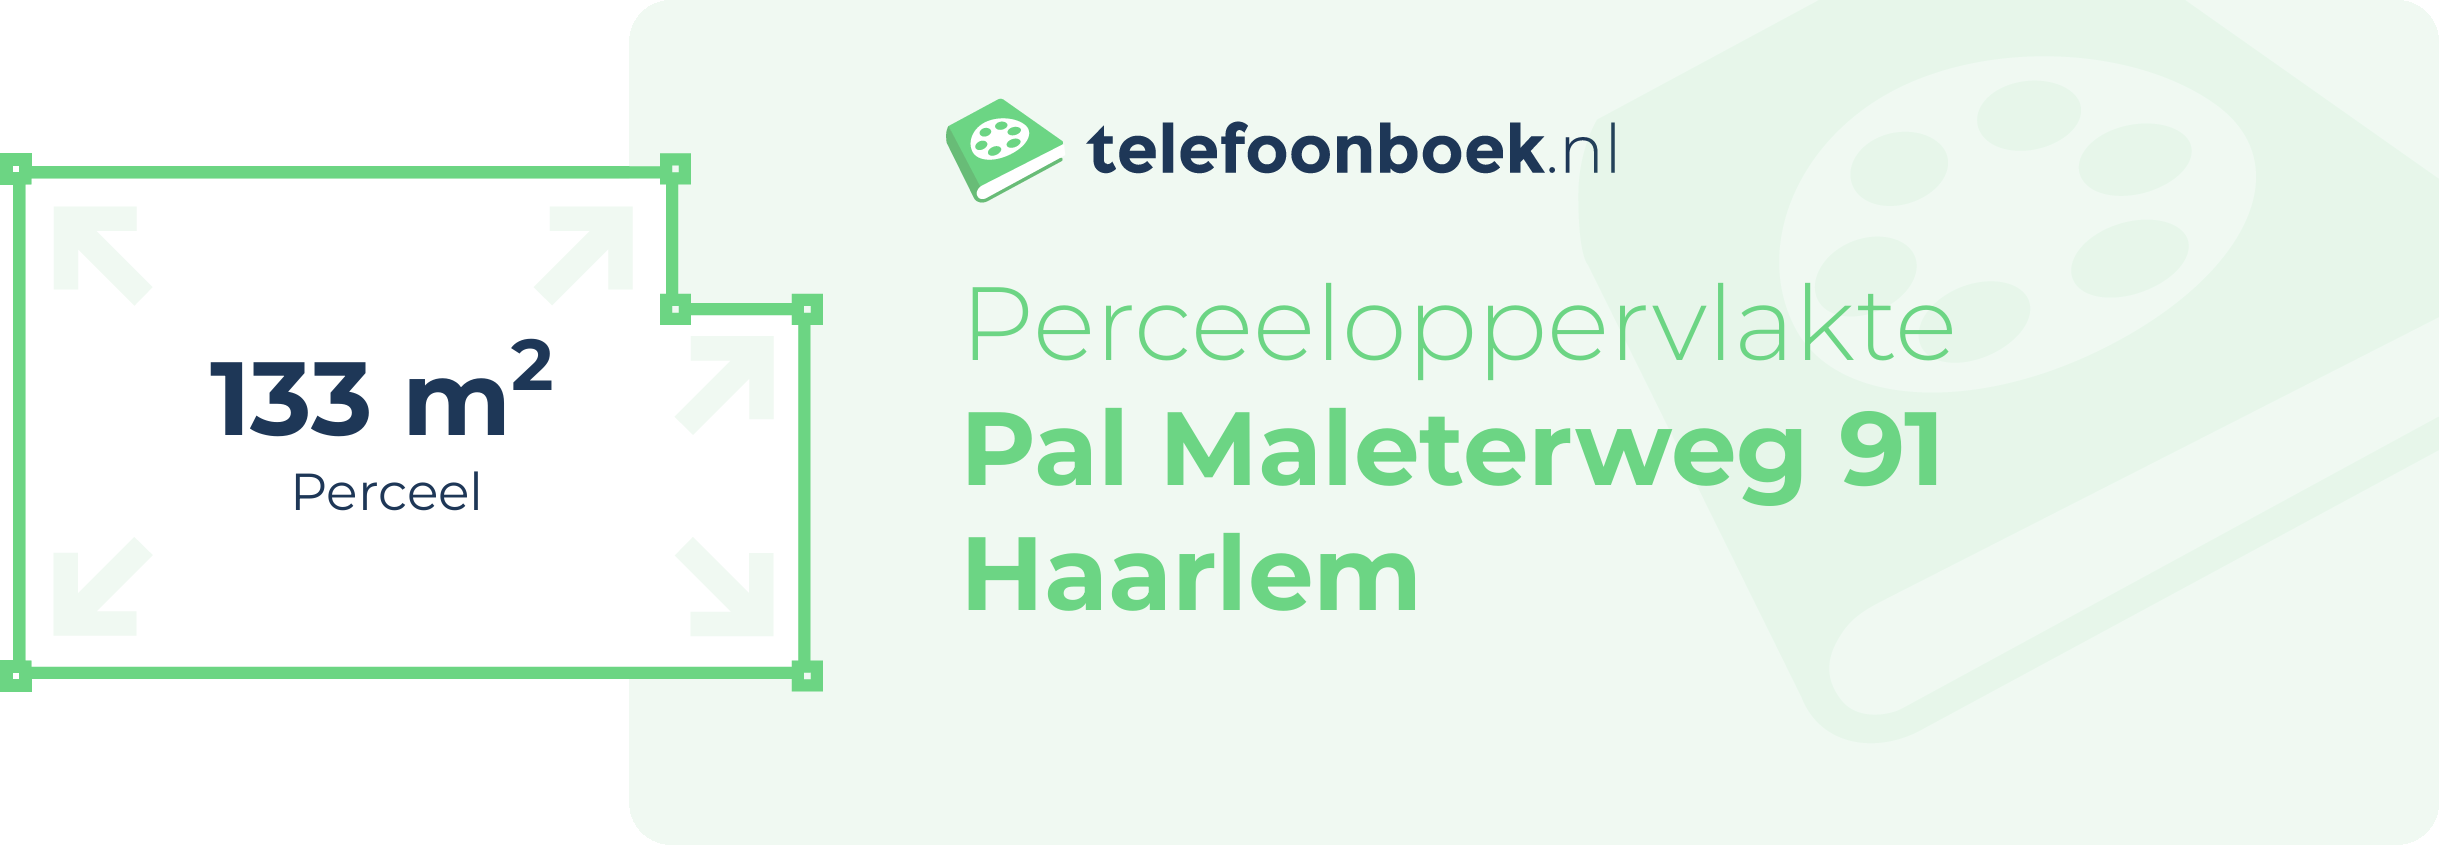 Perceeloppervlakte Pal Maleterweg 91 Haarlem